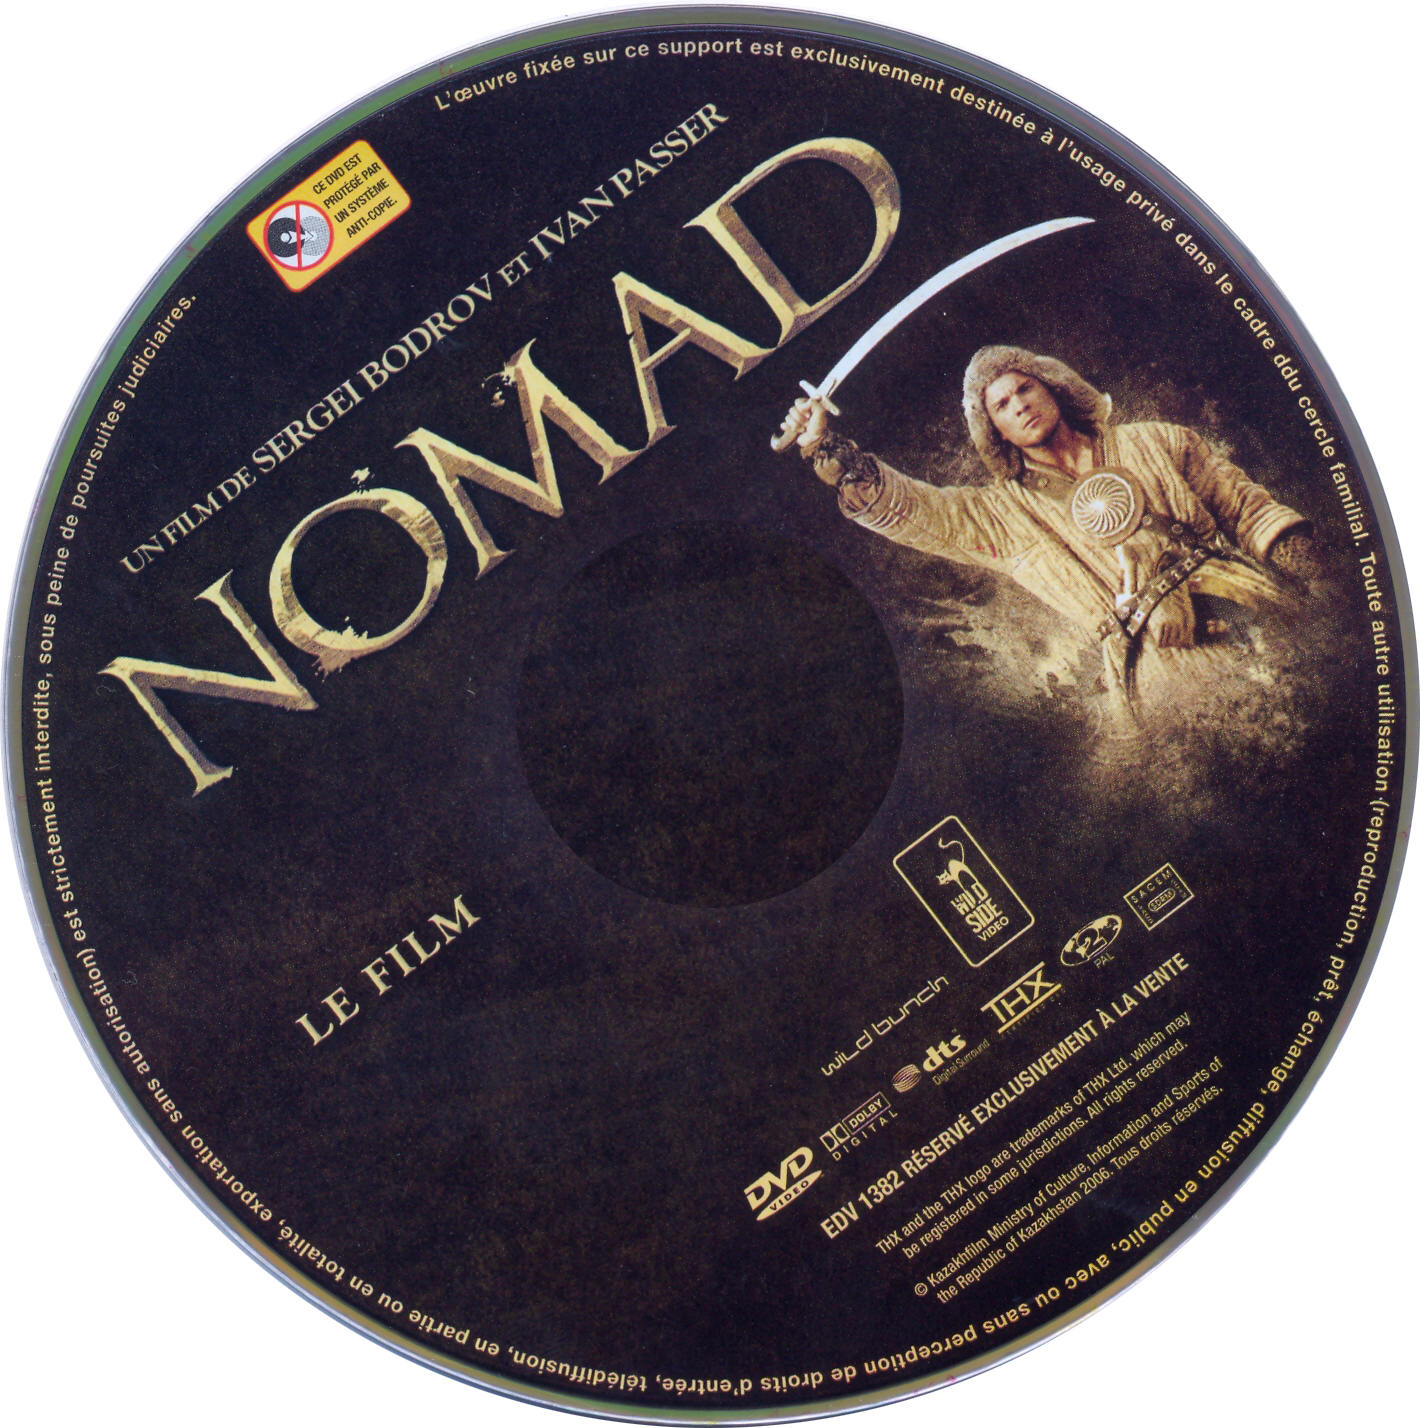 Nomad DISC 1